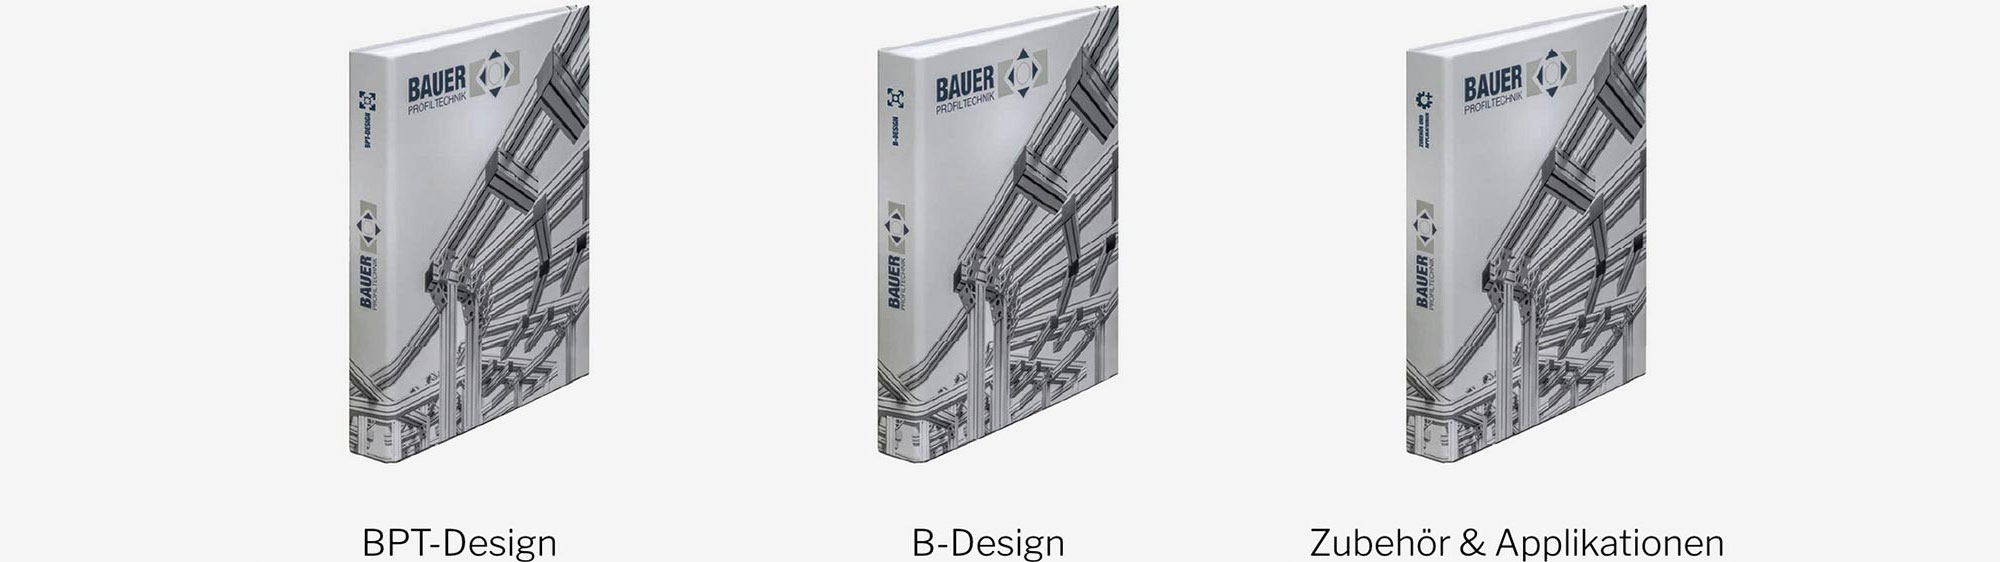 bauer-profiltechnik katalog bpt-design